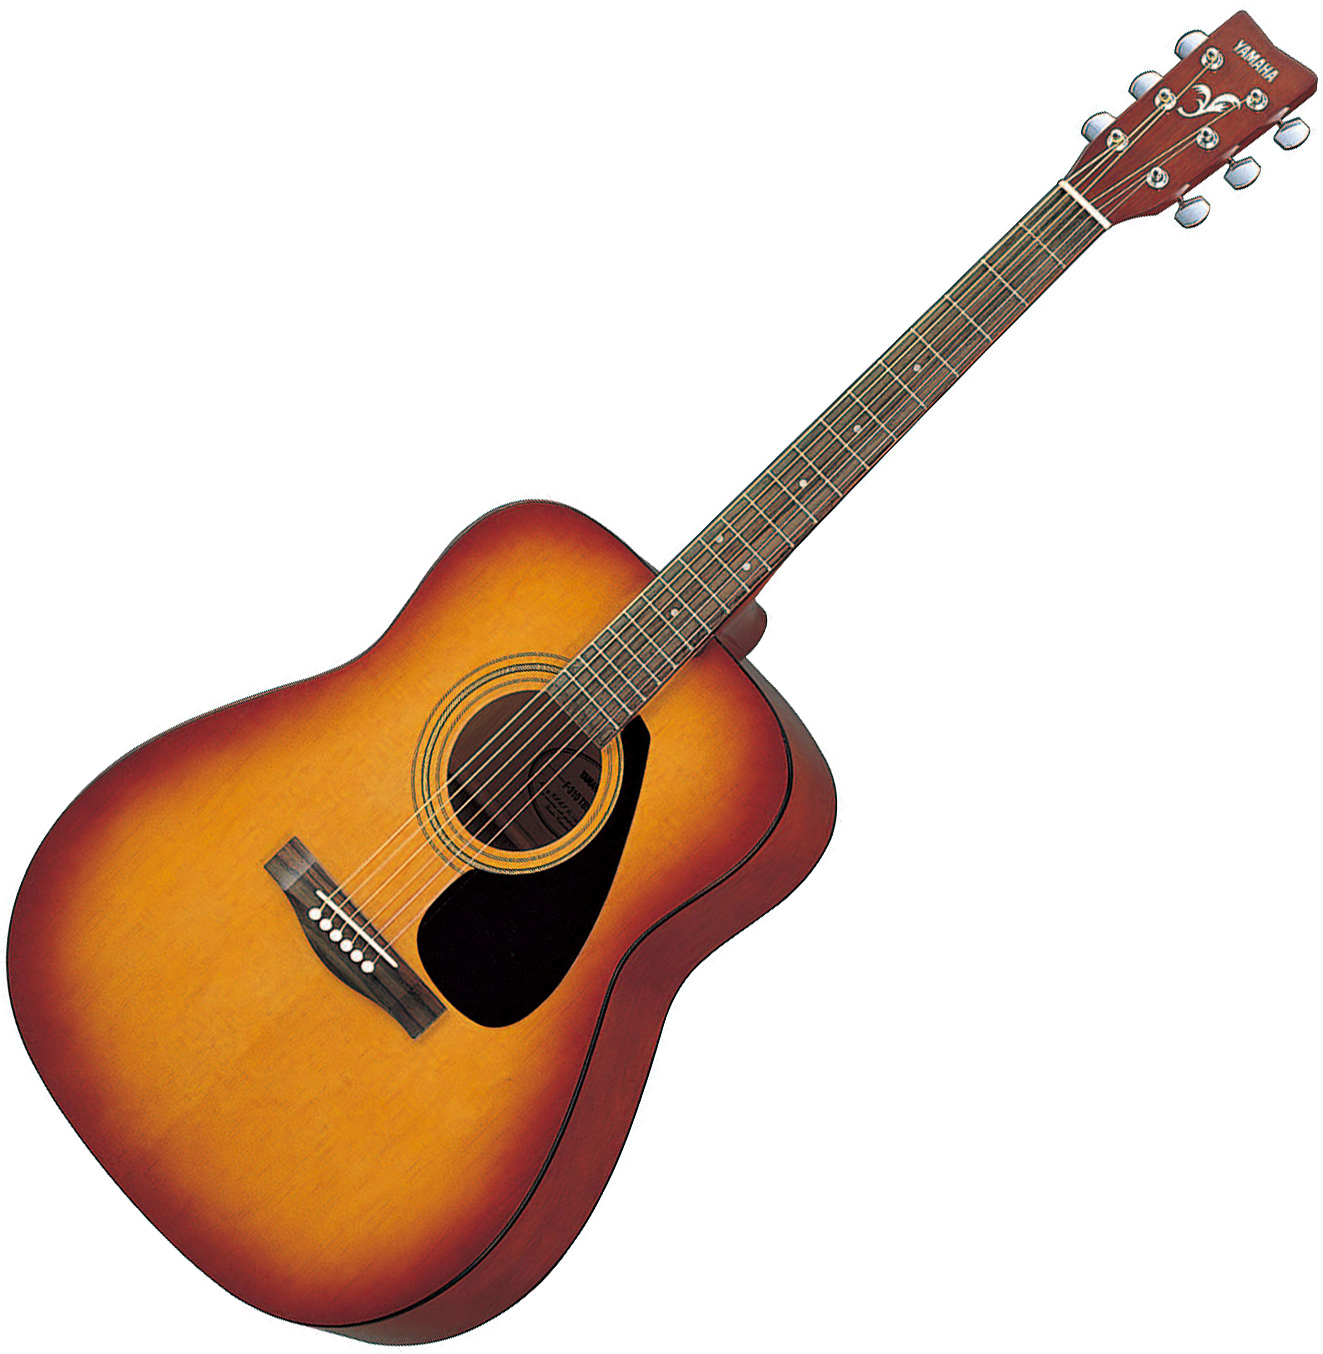 Yamaha F310P - tobacco brown sunburst Acoustic guitar set